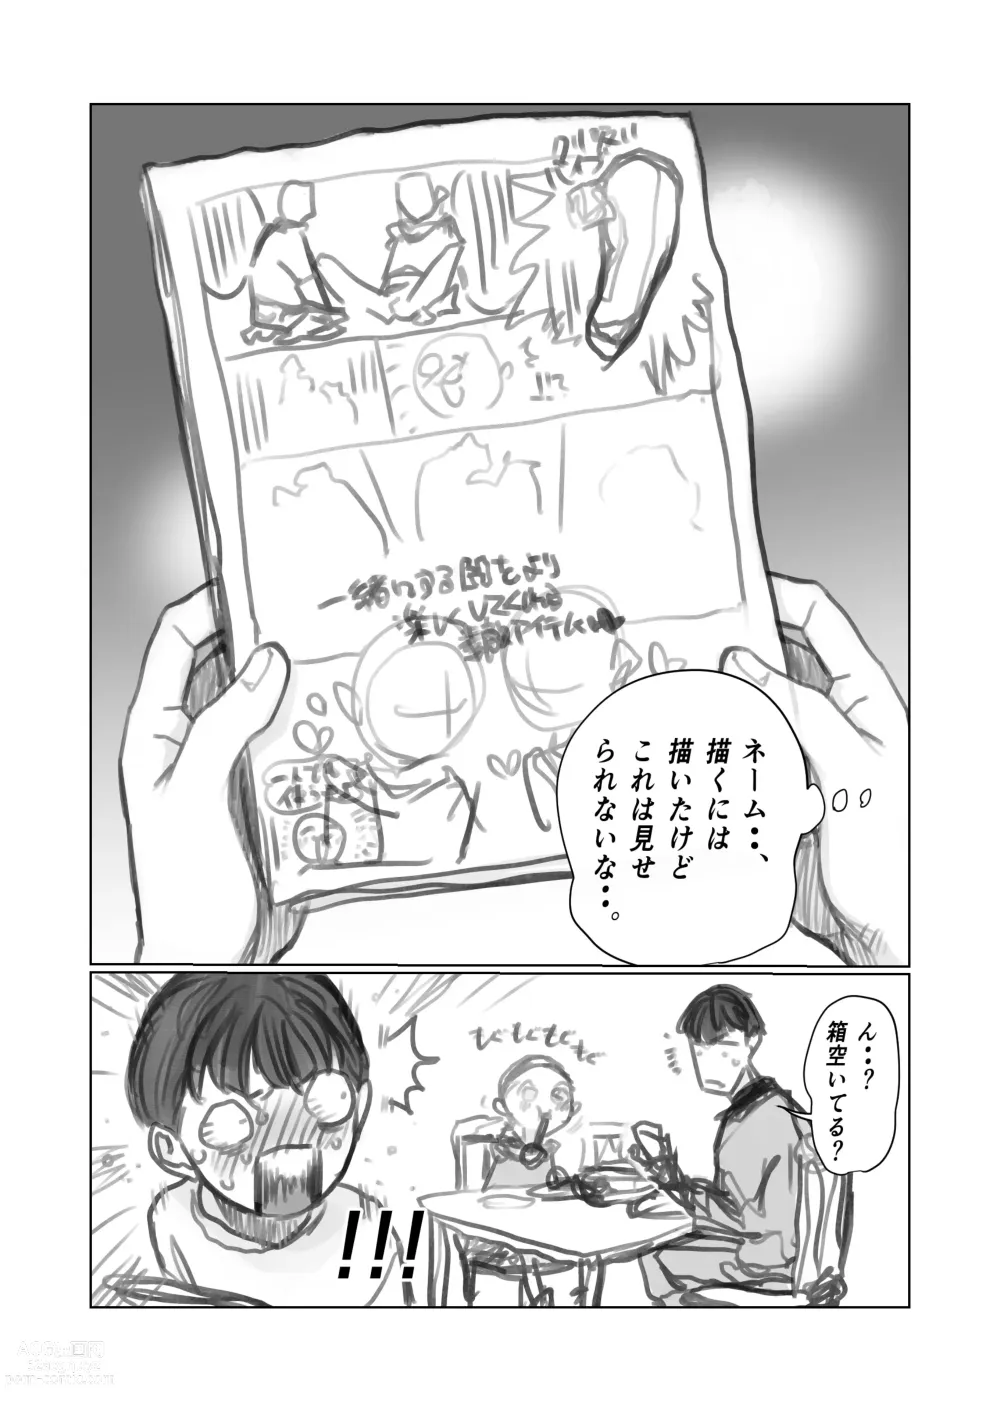 Page 56 of doujinshi Cli Kyuuin Omocha to Sasha-chan.